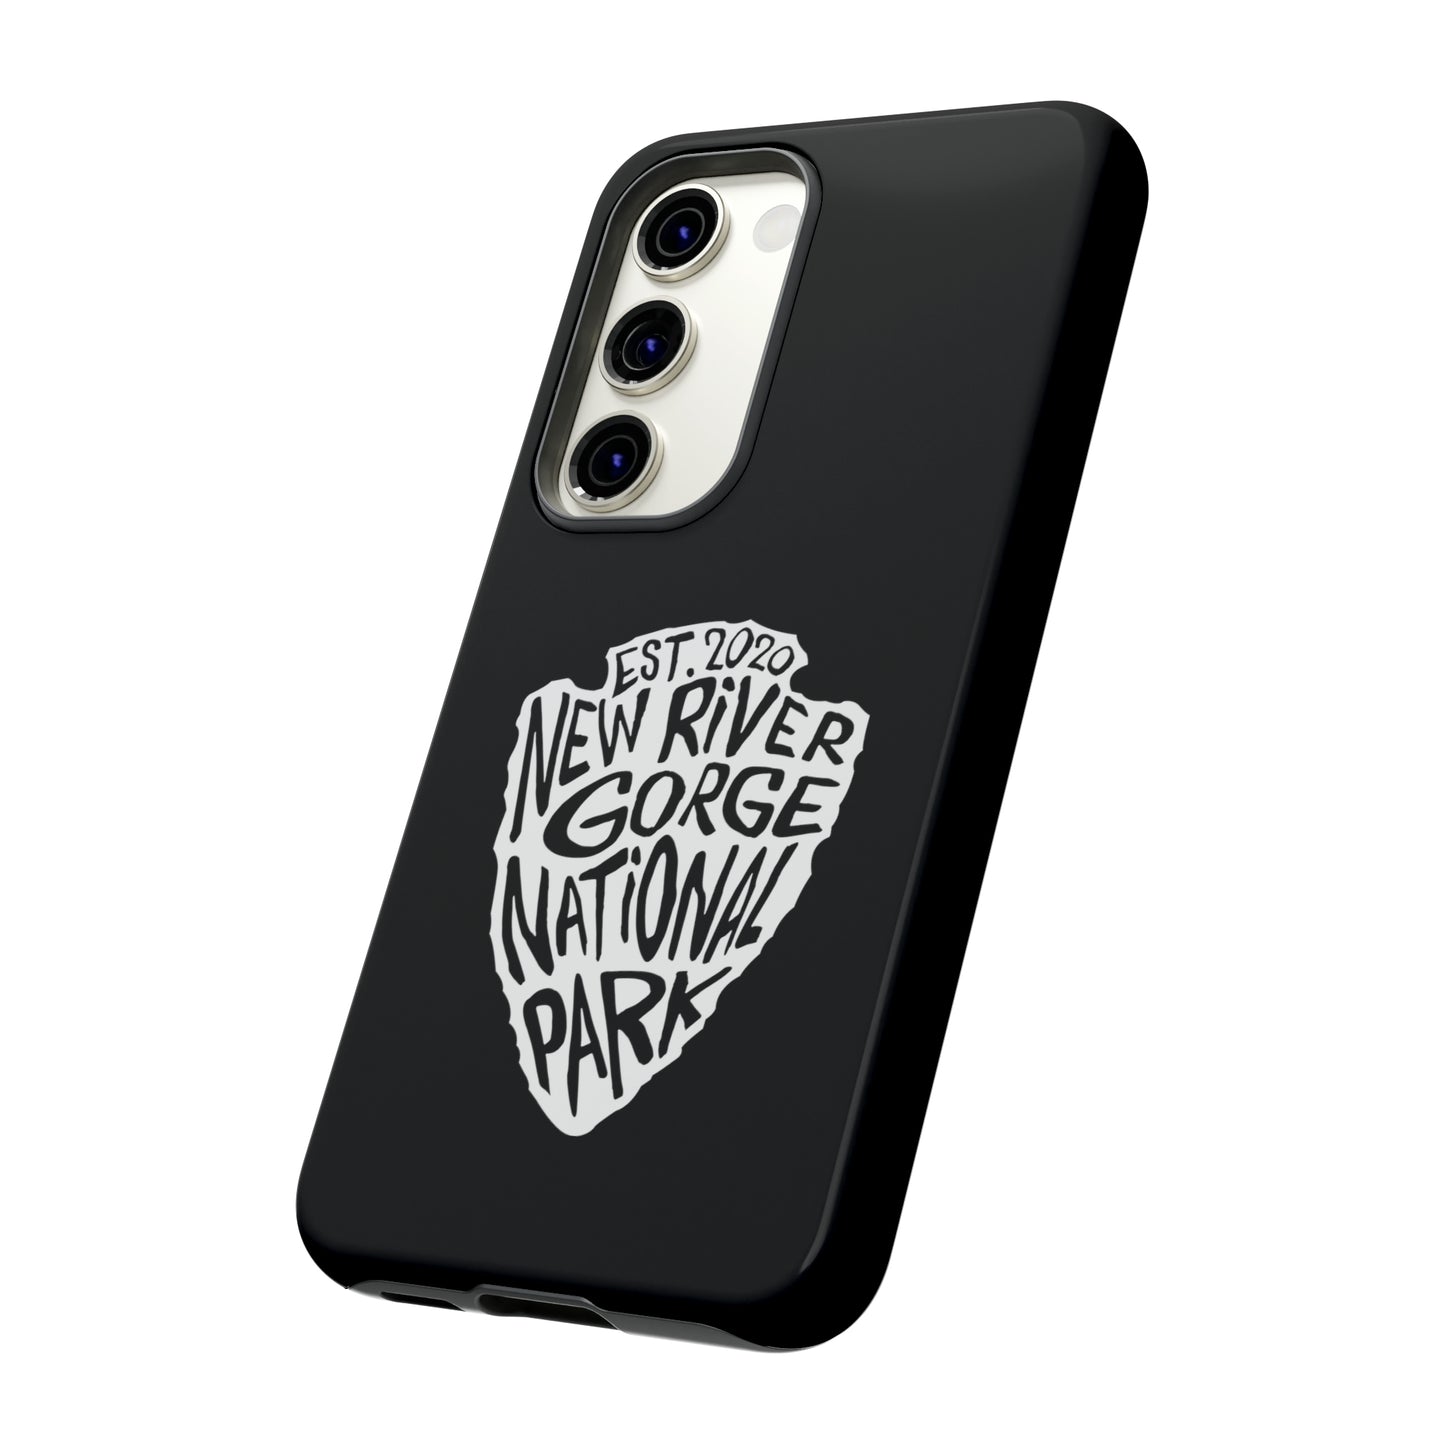 New River Gorge National Park Phone Case - Arrowhead Design